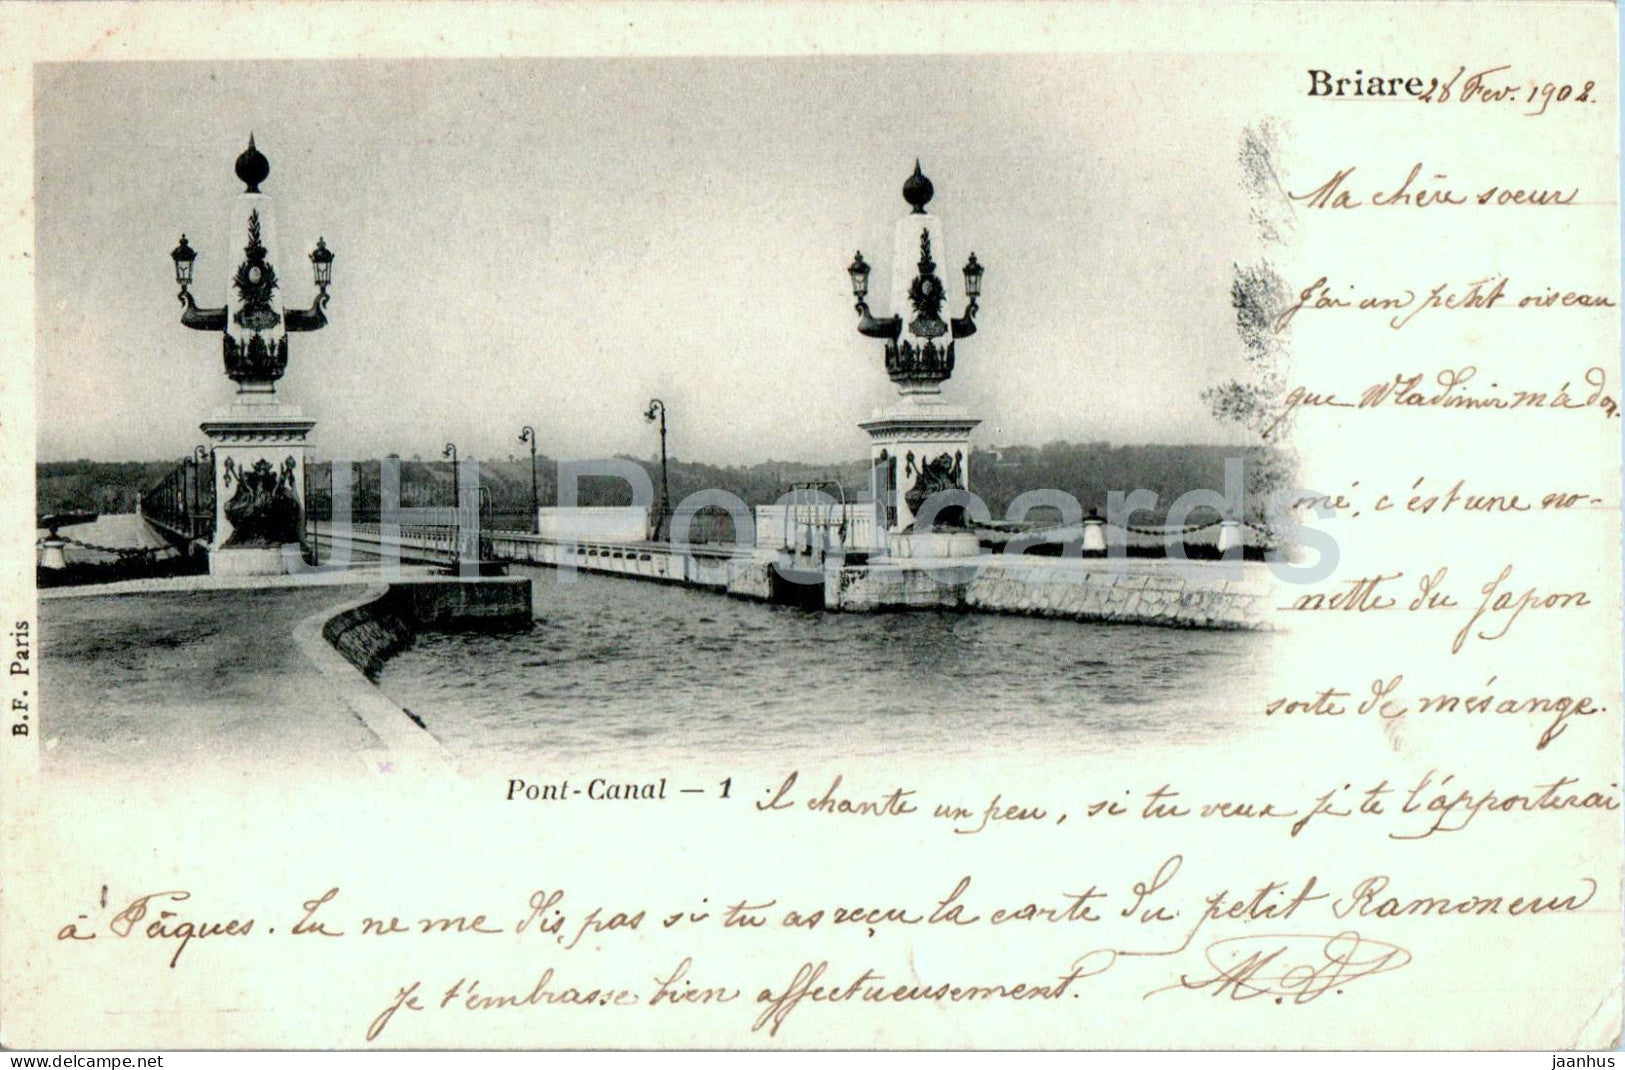 Briare - Pont Canal - bridge - 1 - old postcard - 1902 - France - used - JH Postcards